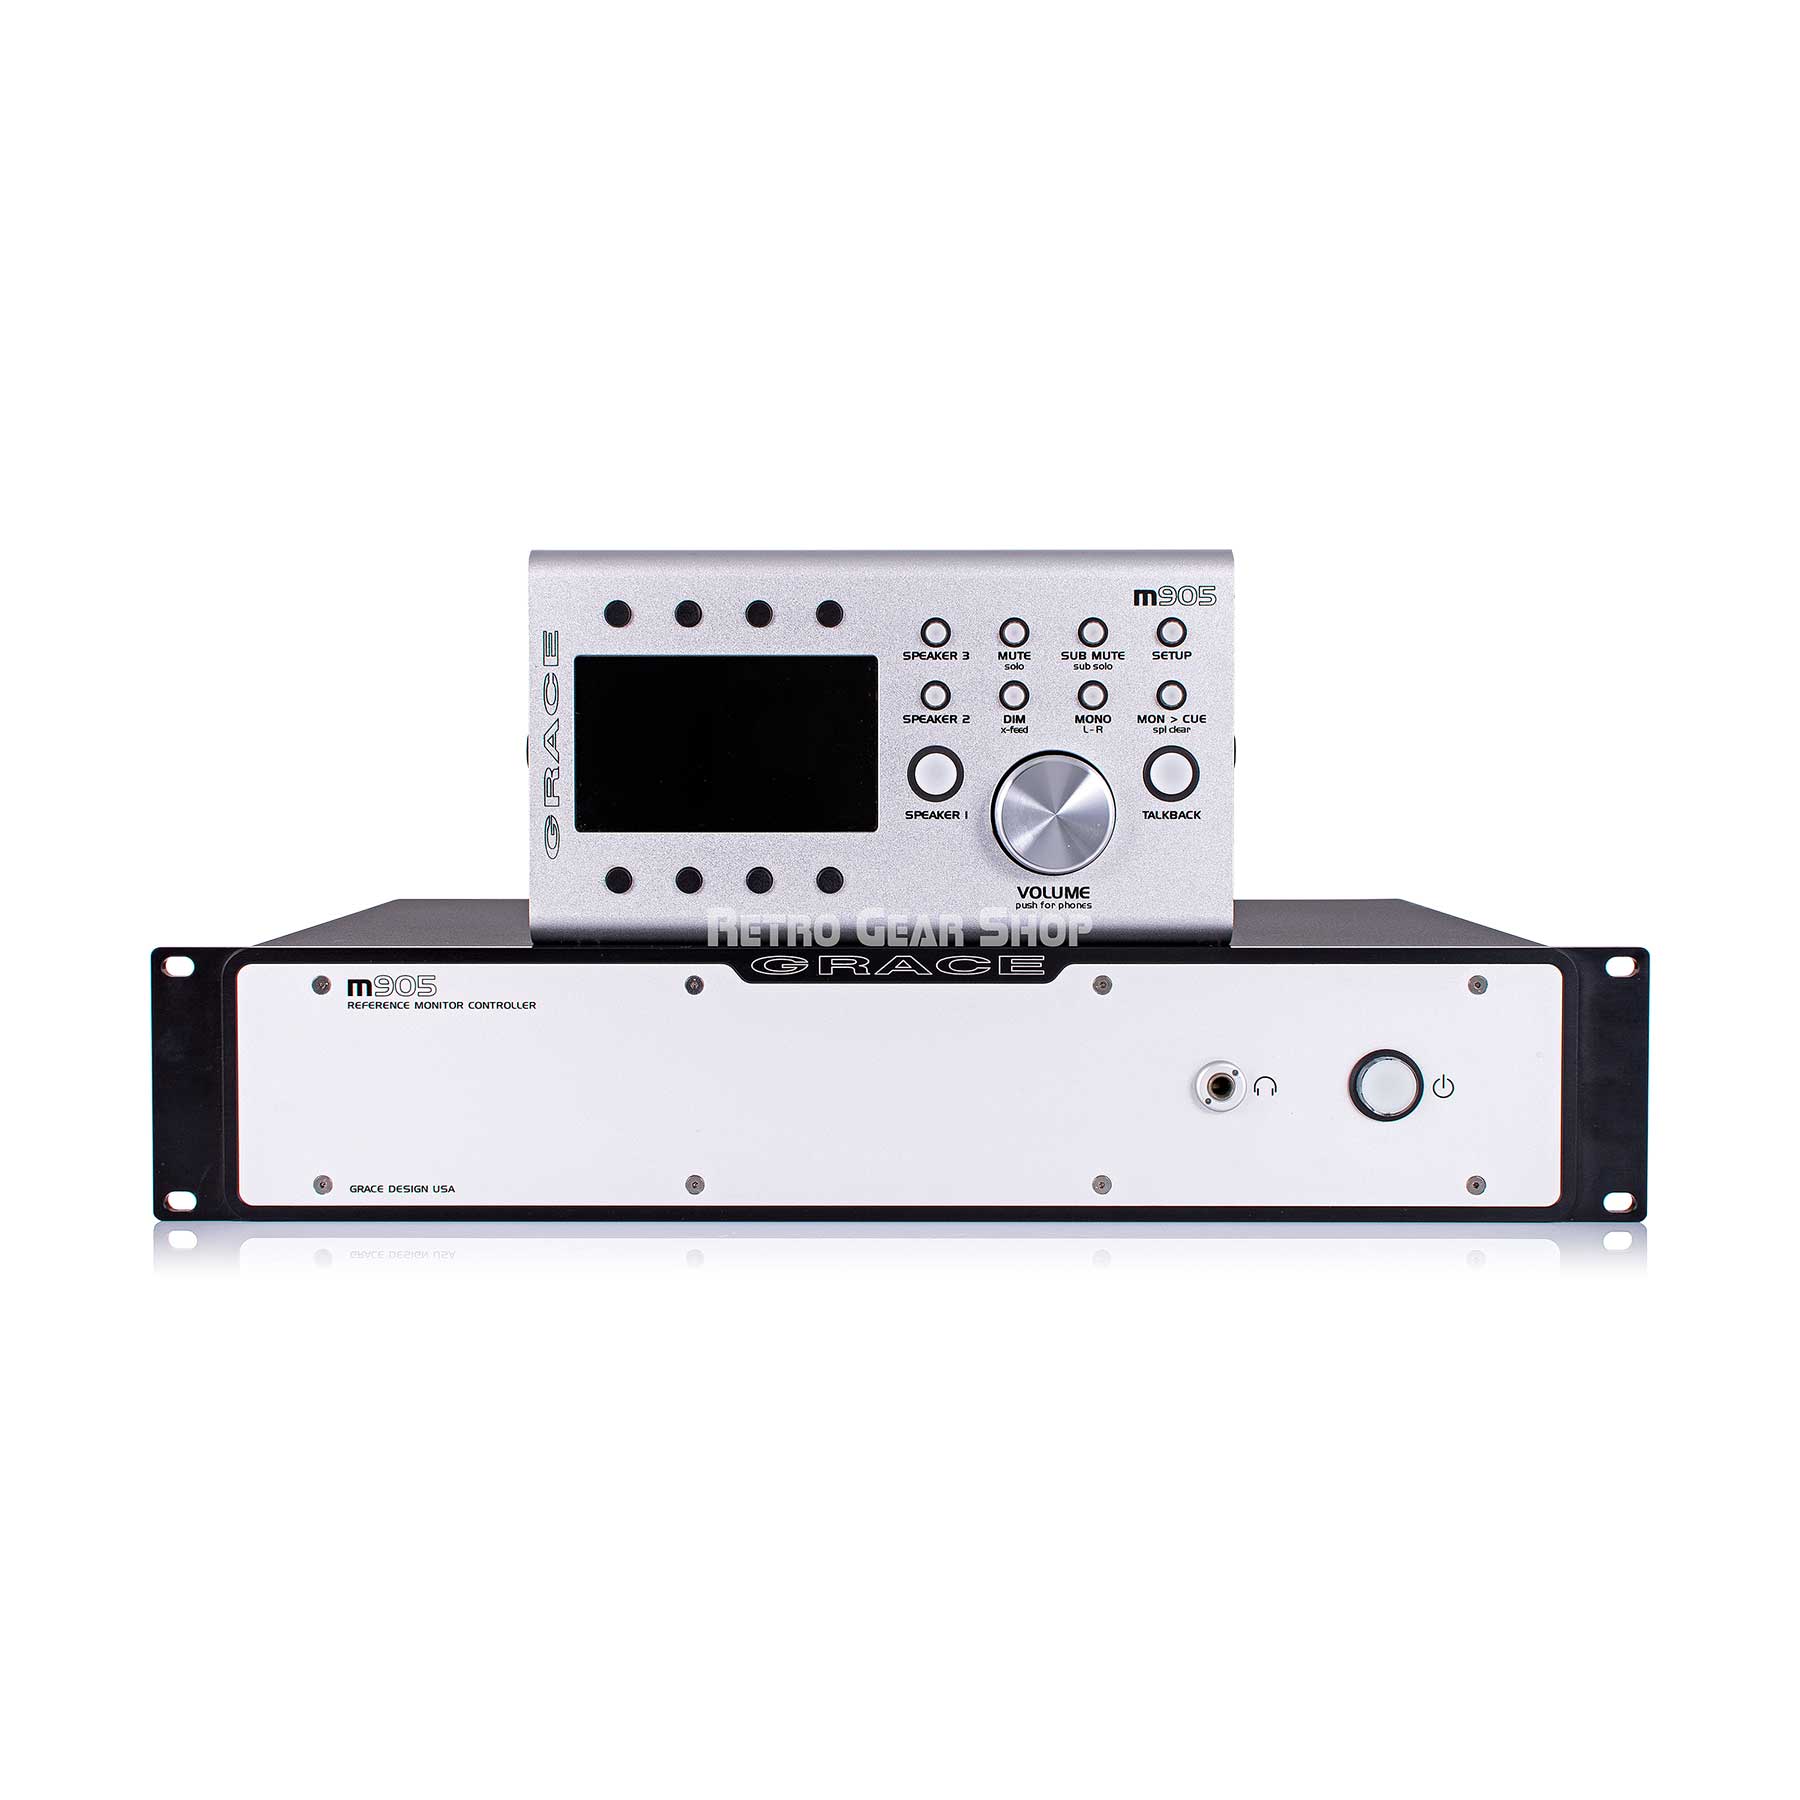 Grace Design m905 Monitor Control System + Digital + Remote - Silver